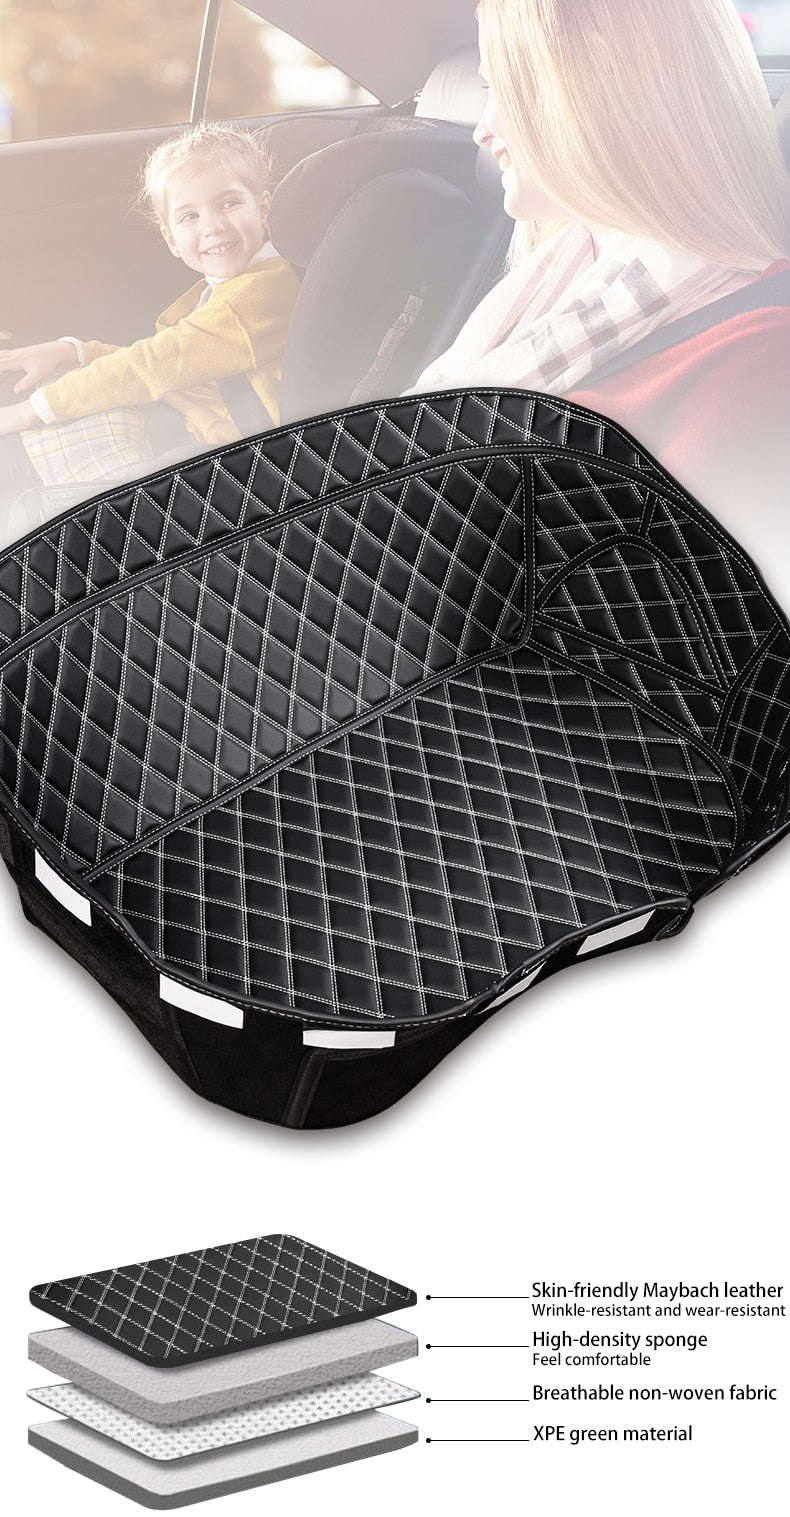 Tesla Model 3 & Y 2020 2021 Wear-Resistant Leather Front Trunk Storage Mat